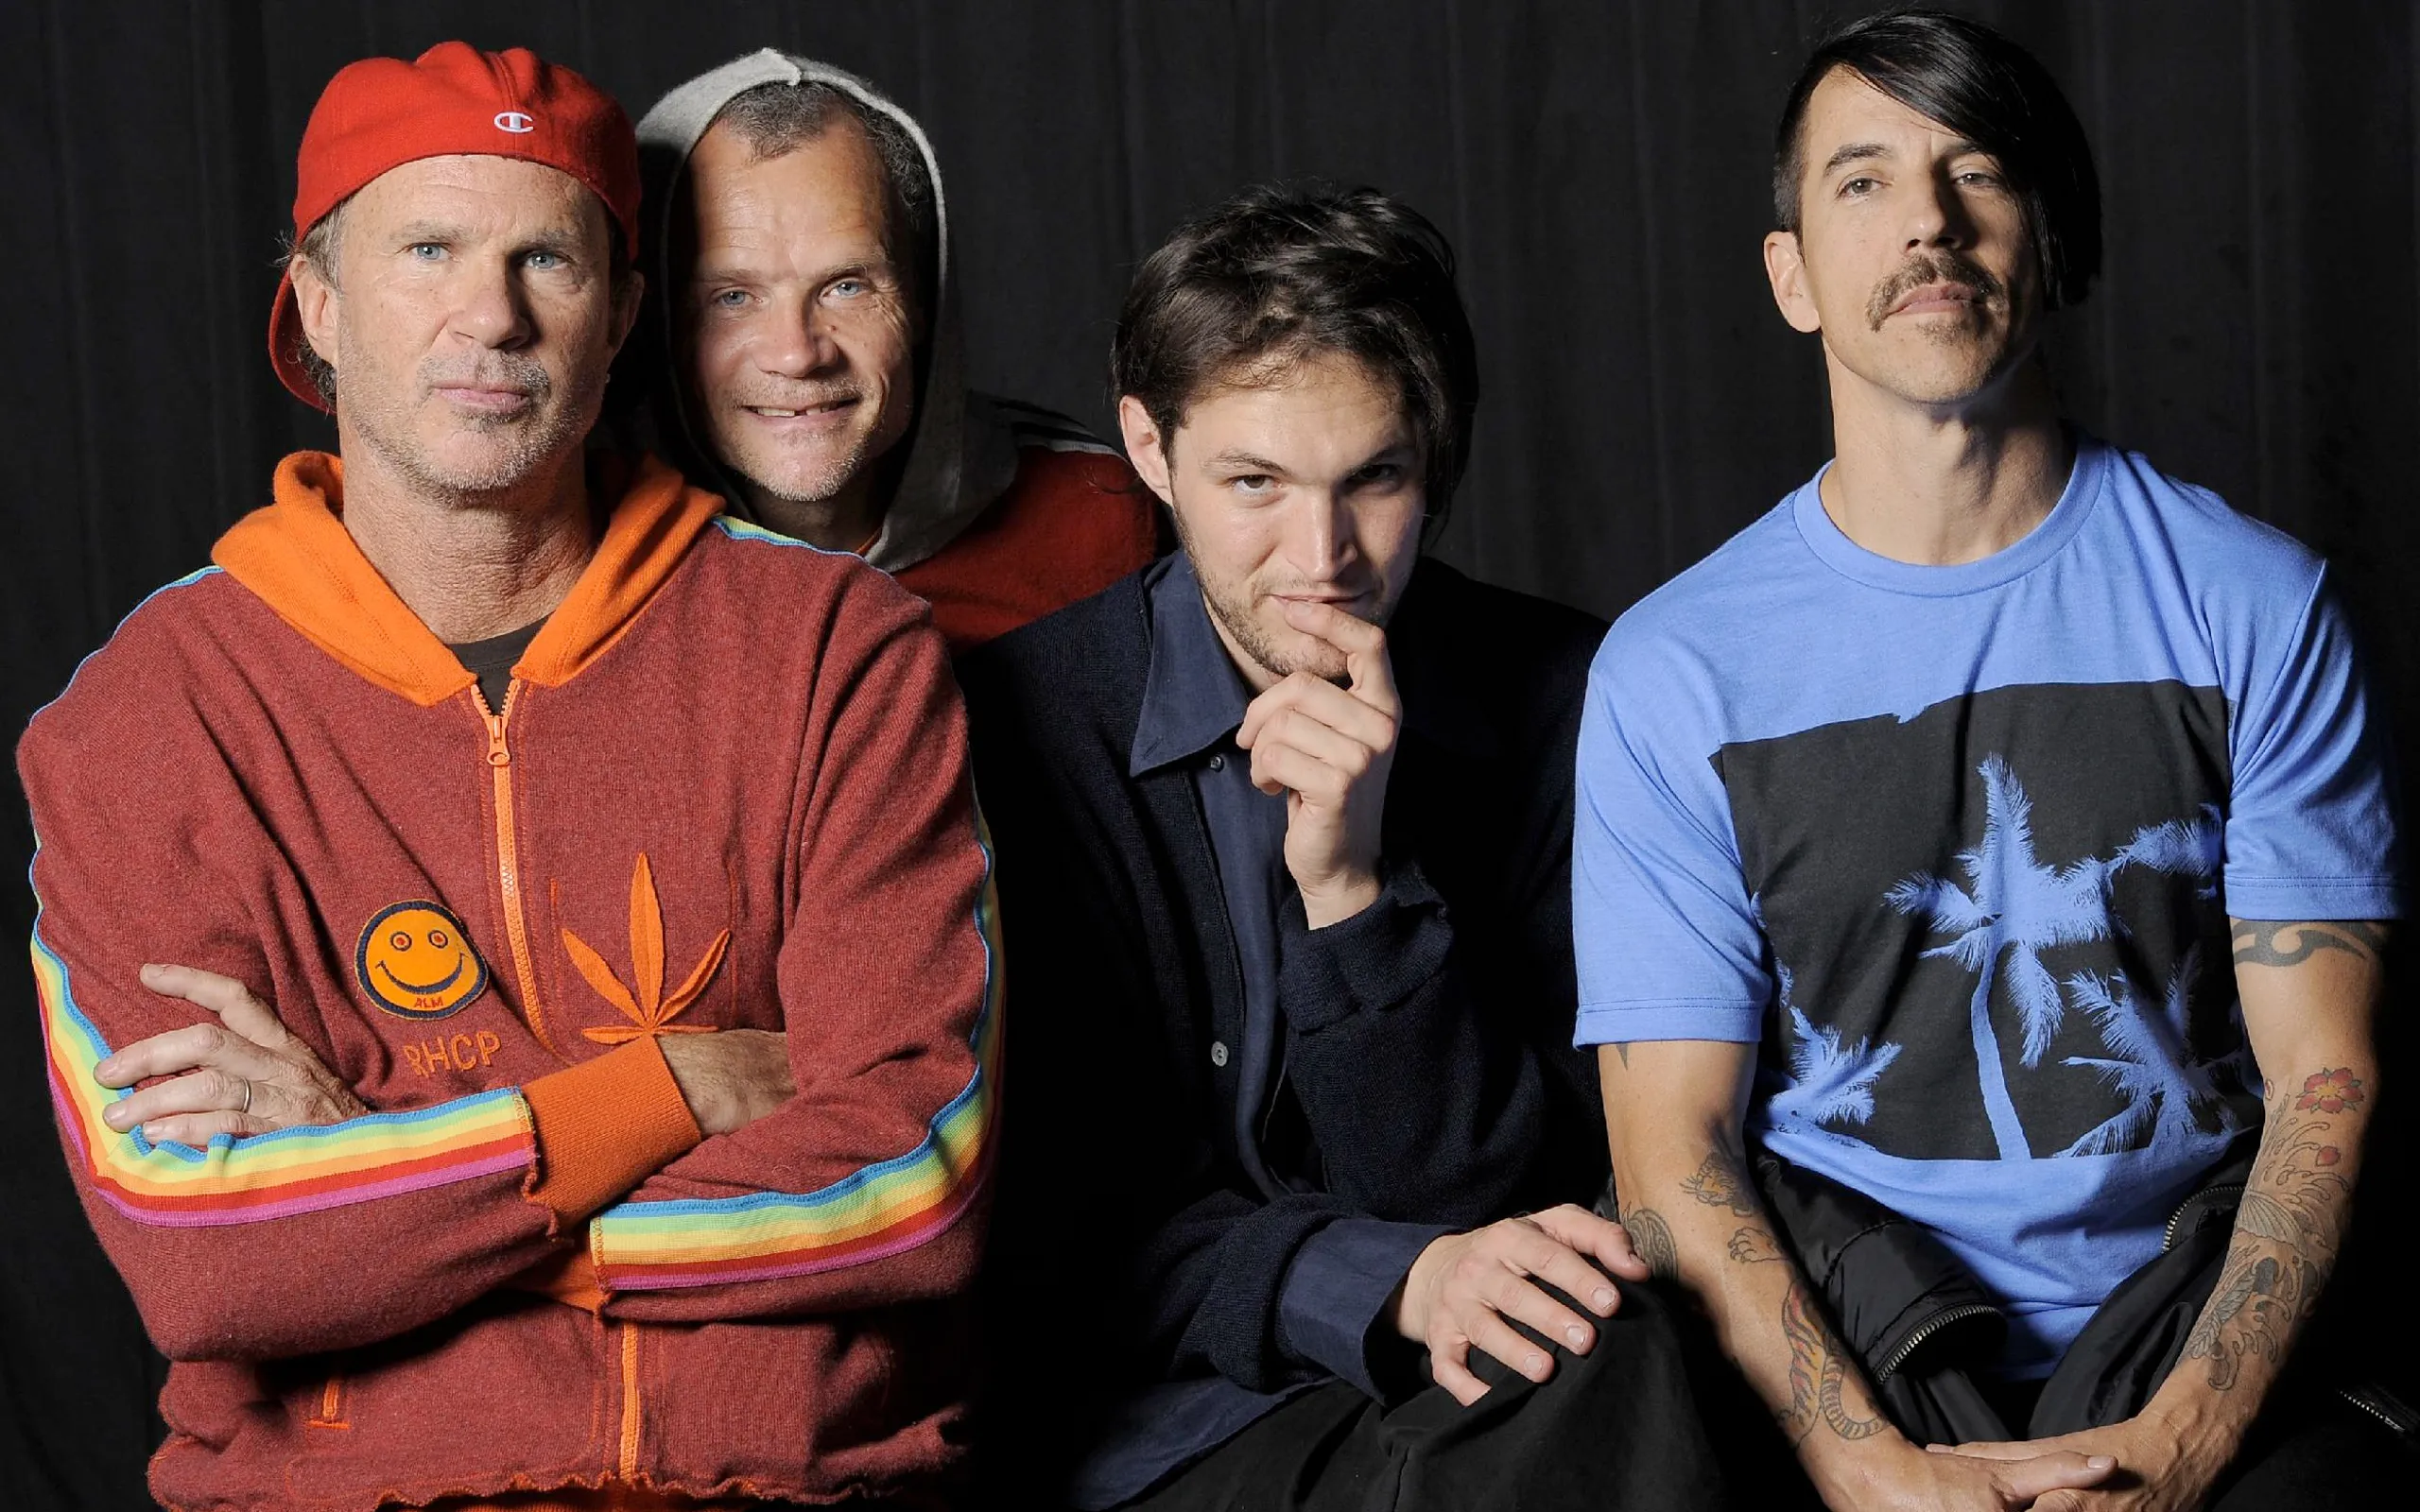 Chili peppers mp3. Группа ред хот Чили пеперс. Группа Red hot Chili Peppers 2022. Ред хот Чили пеперс 2000. Барабанщик ред хот Чили пеперс.